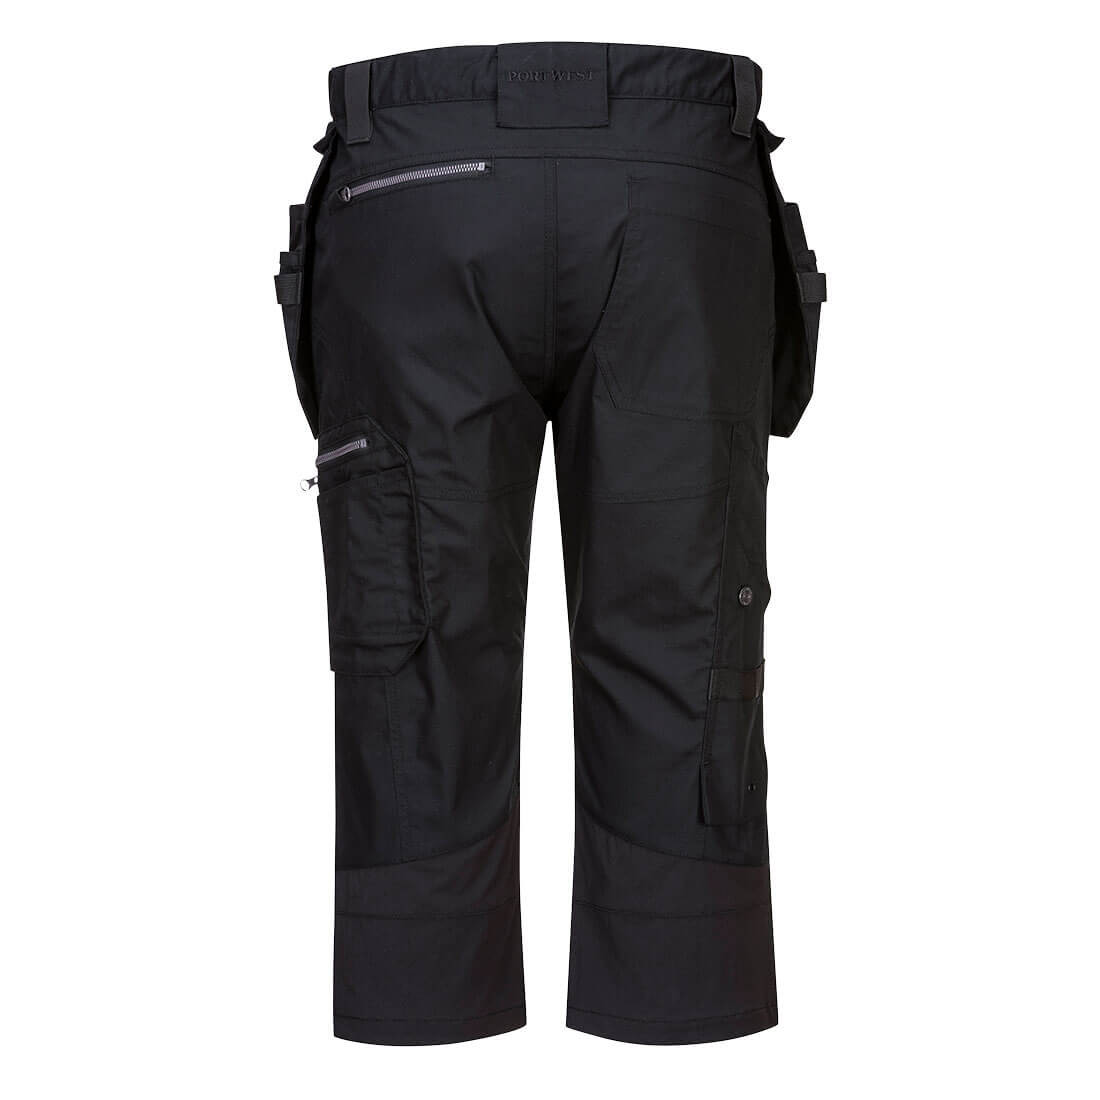 Pantaloni 3/4 KX3 - Imbracaminte de protectie